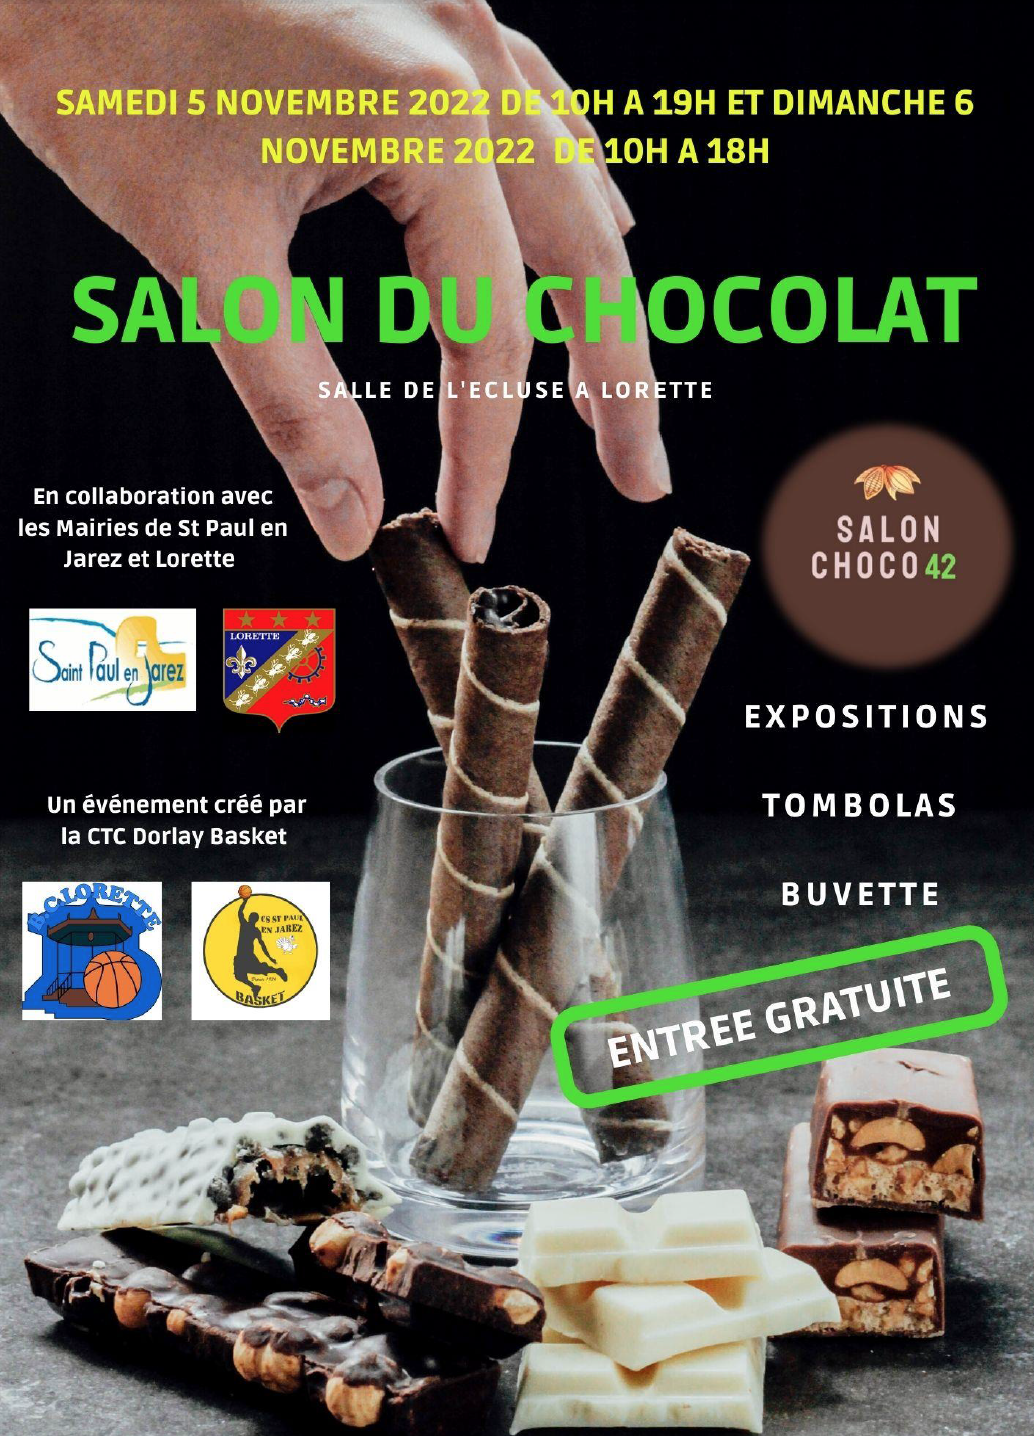 Choco 42, le deuxième salon du chocolat de la CTC Dorlay Basket